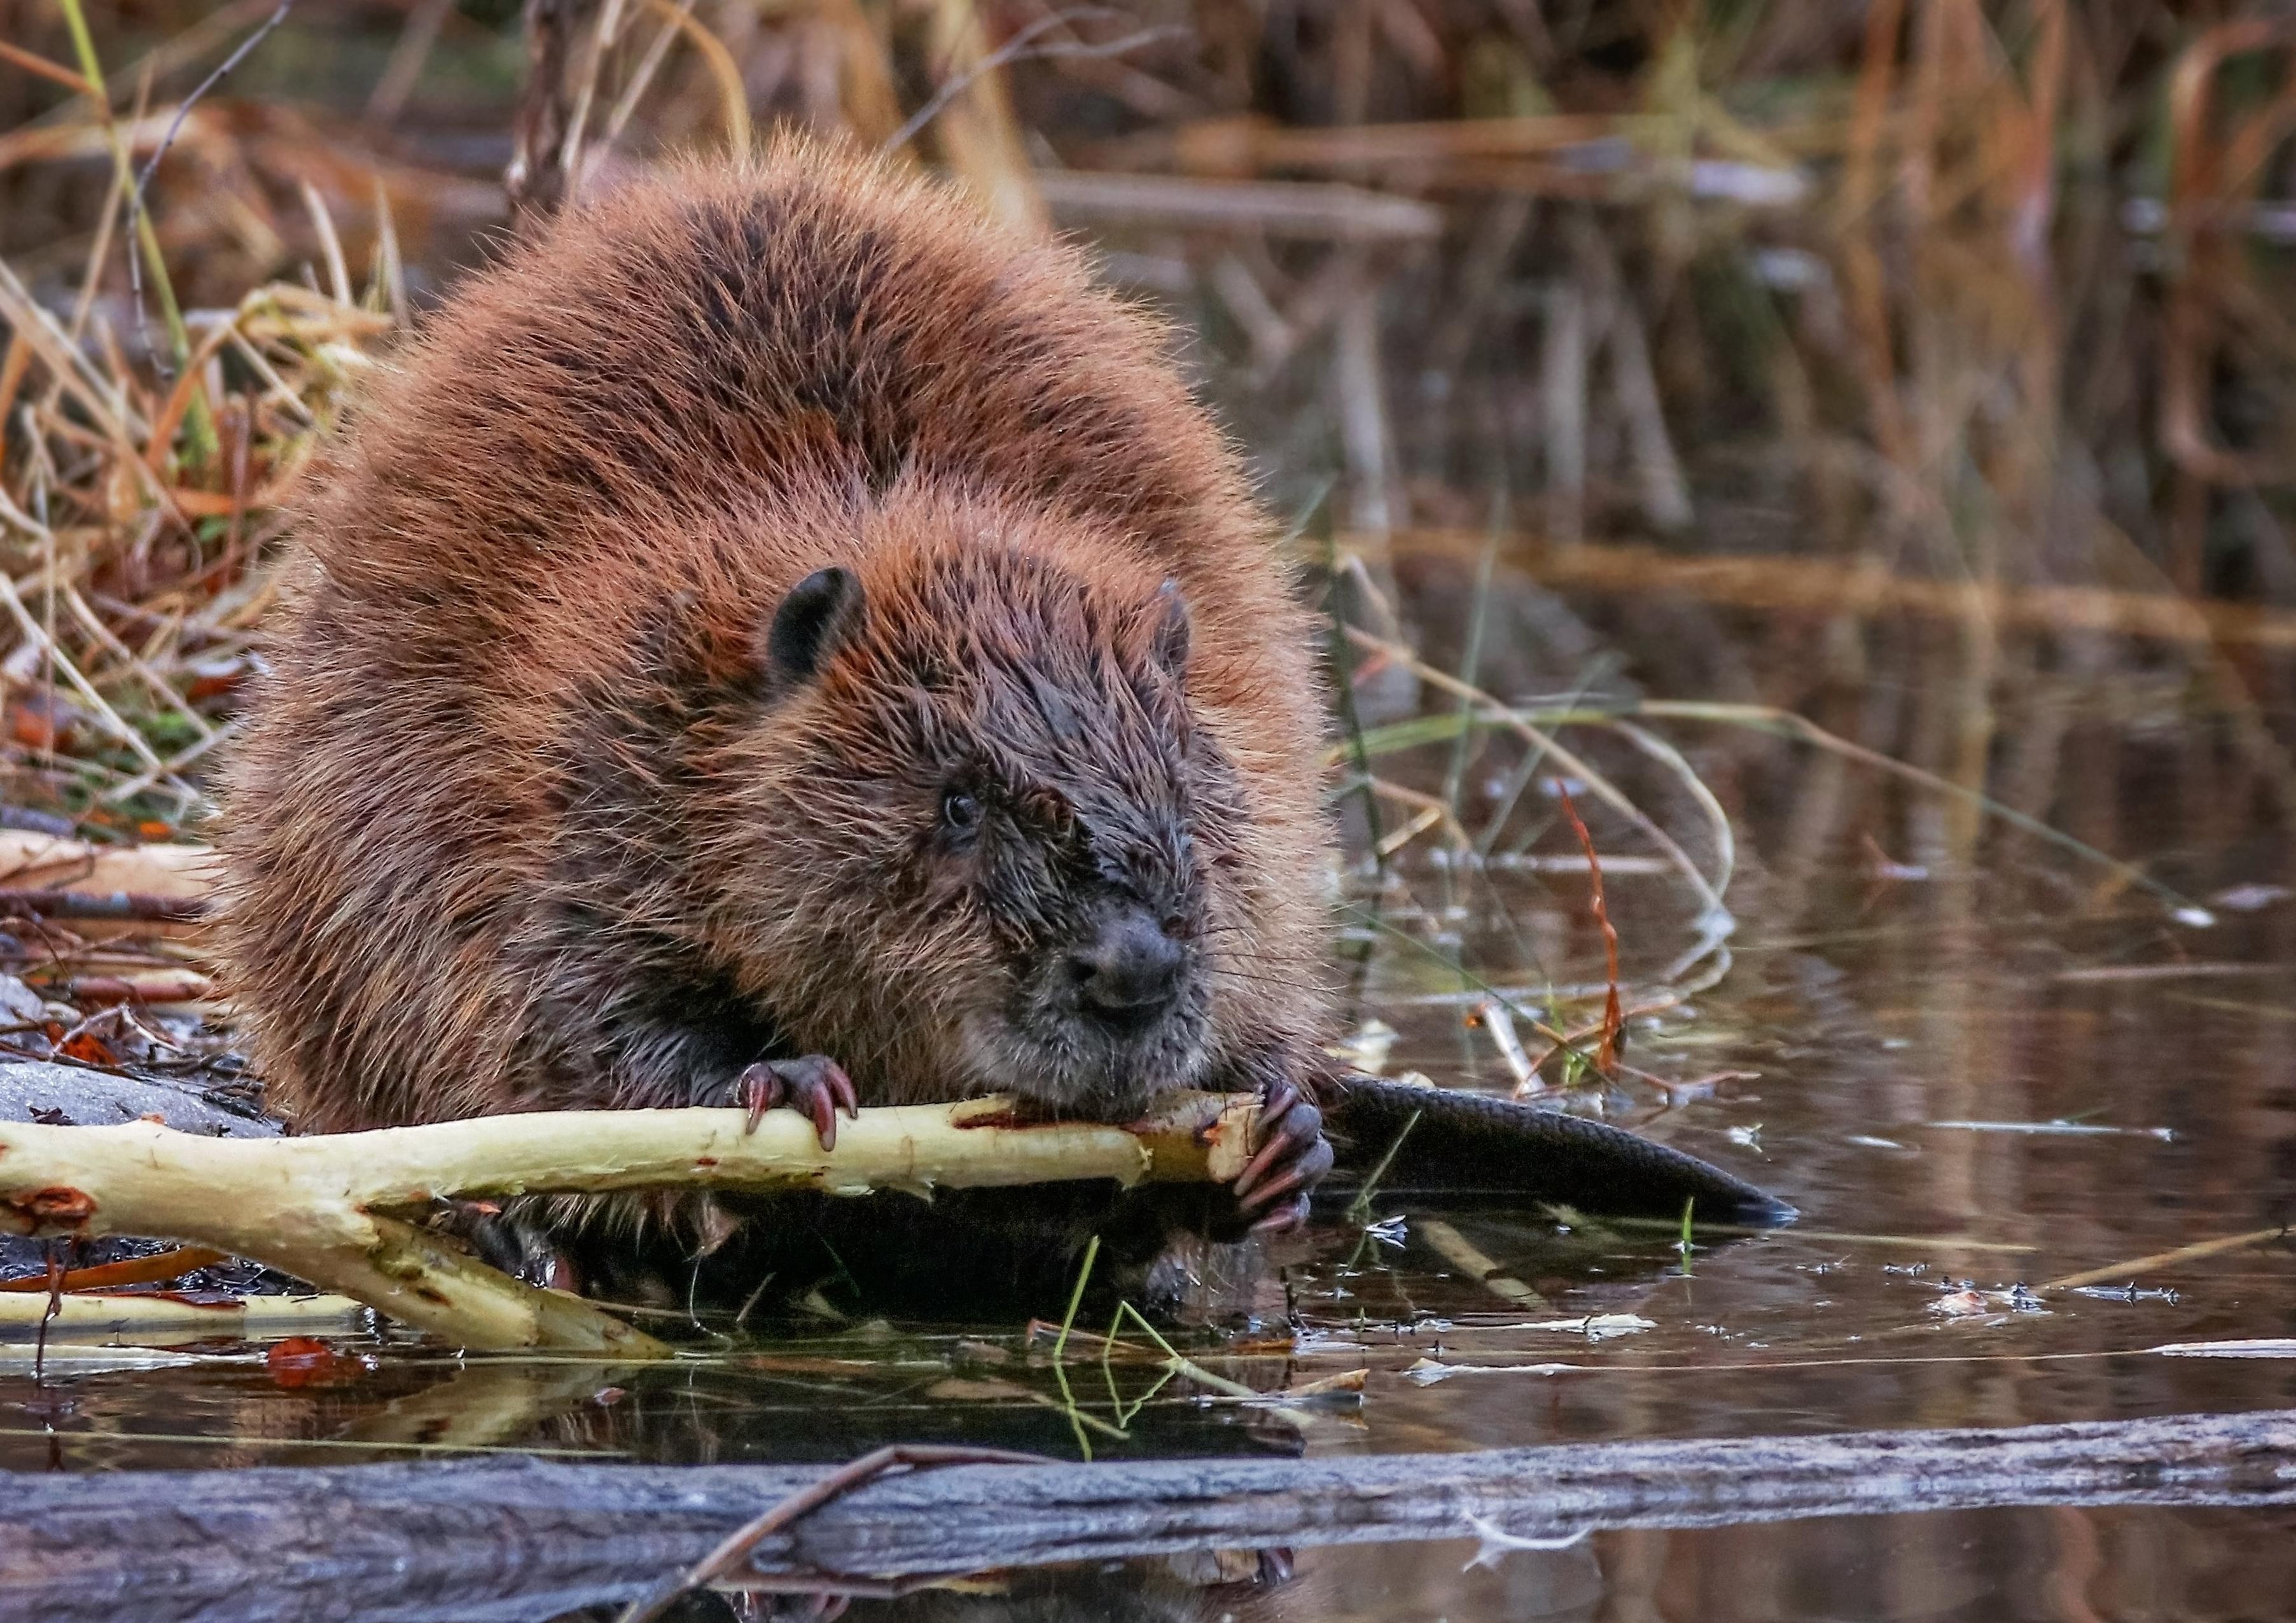 Beavers are no substitute for proper flood defences across Yorkshire – Bernard Ingham - Yorkshire Post